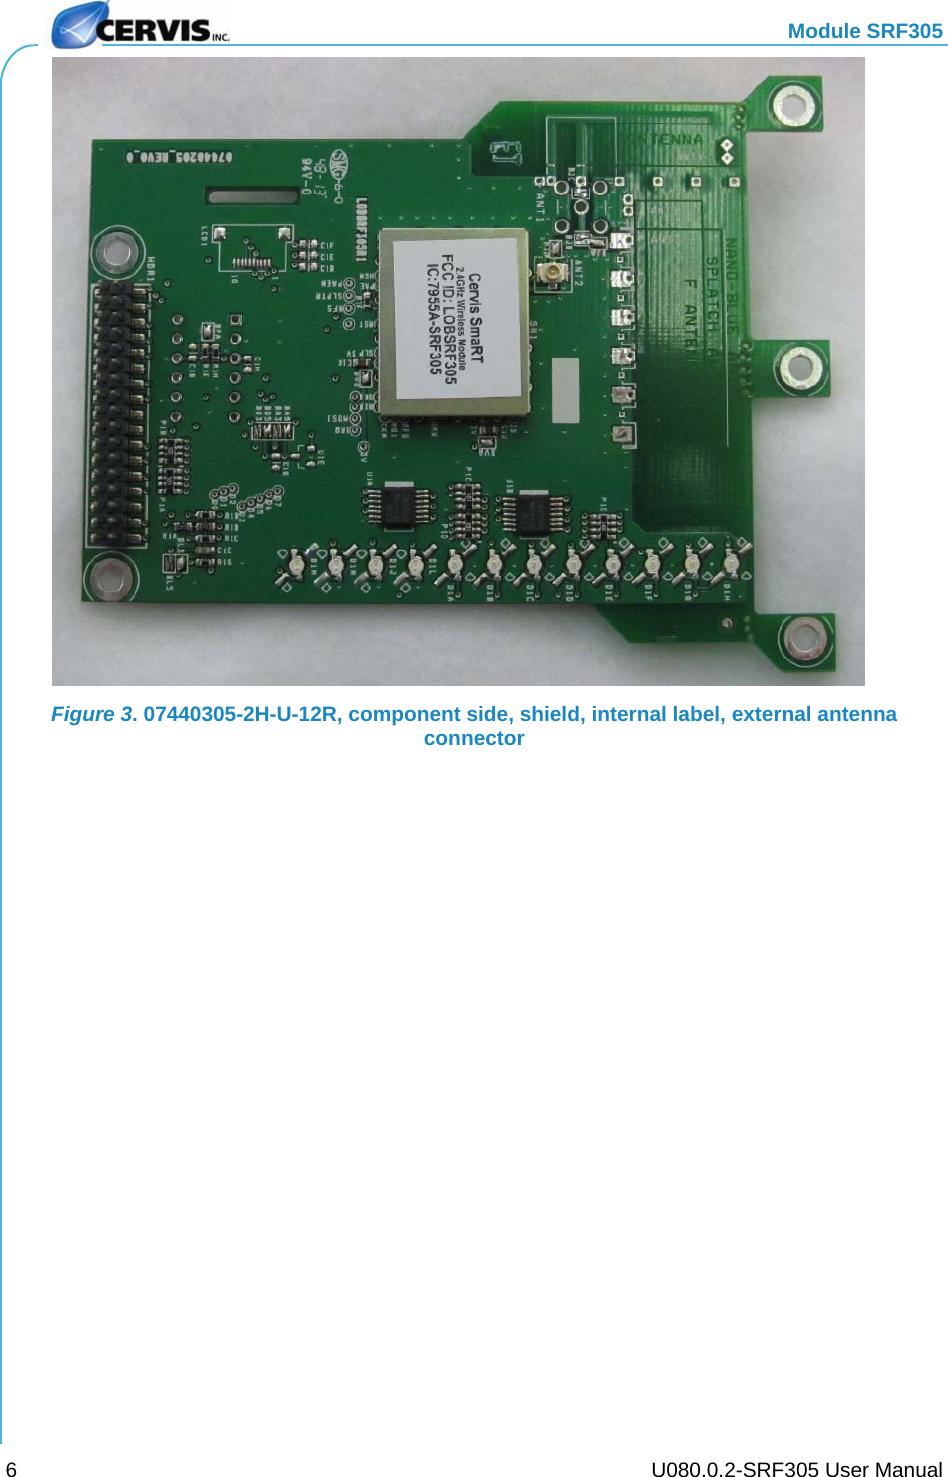   Module SRF305     U080.0.2-SRF305 User Manual 6 Figure 3. 07440305-2H-U-12R, component side, shield, internal label, external antenna connector   